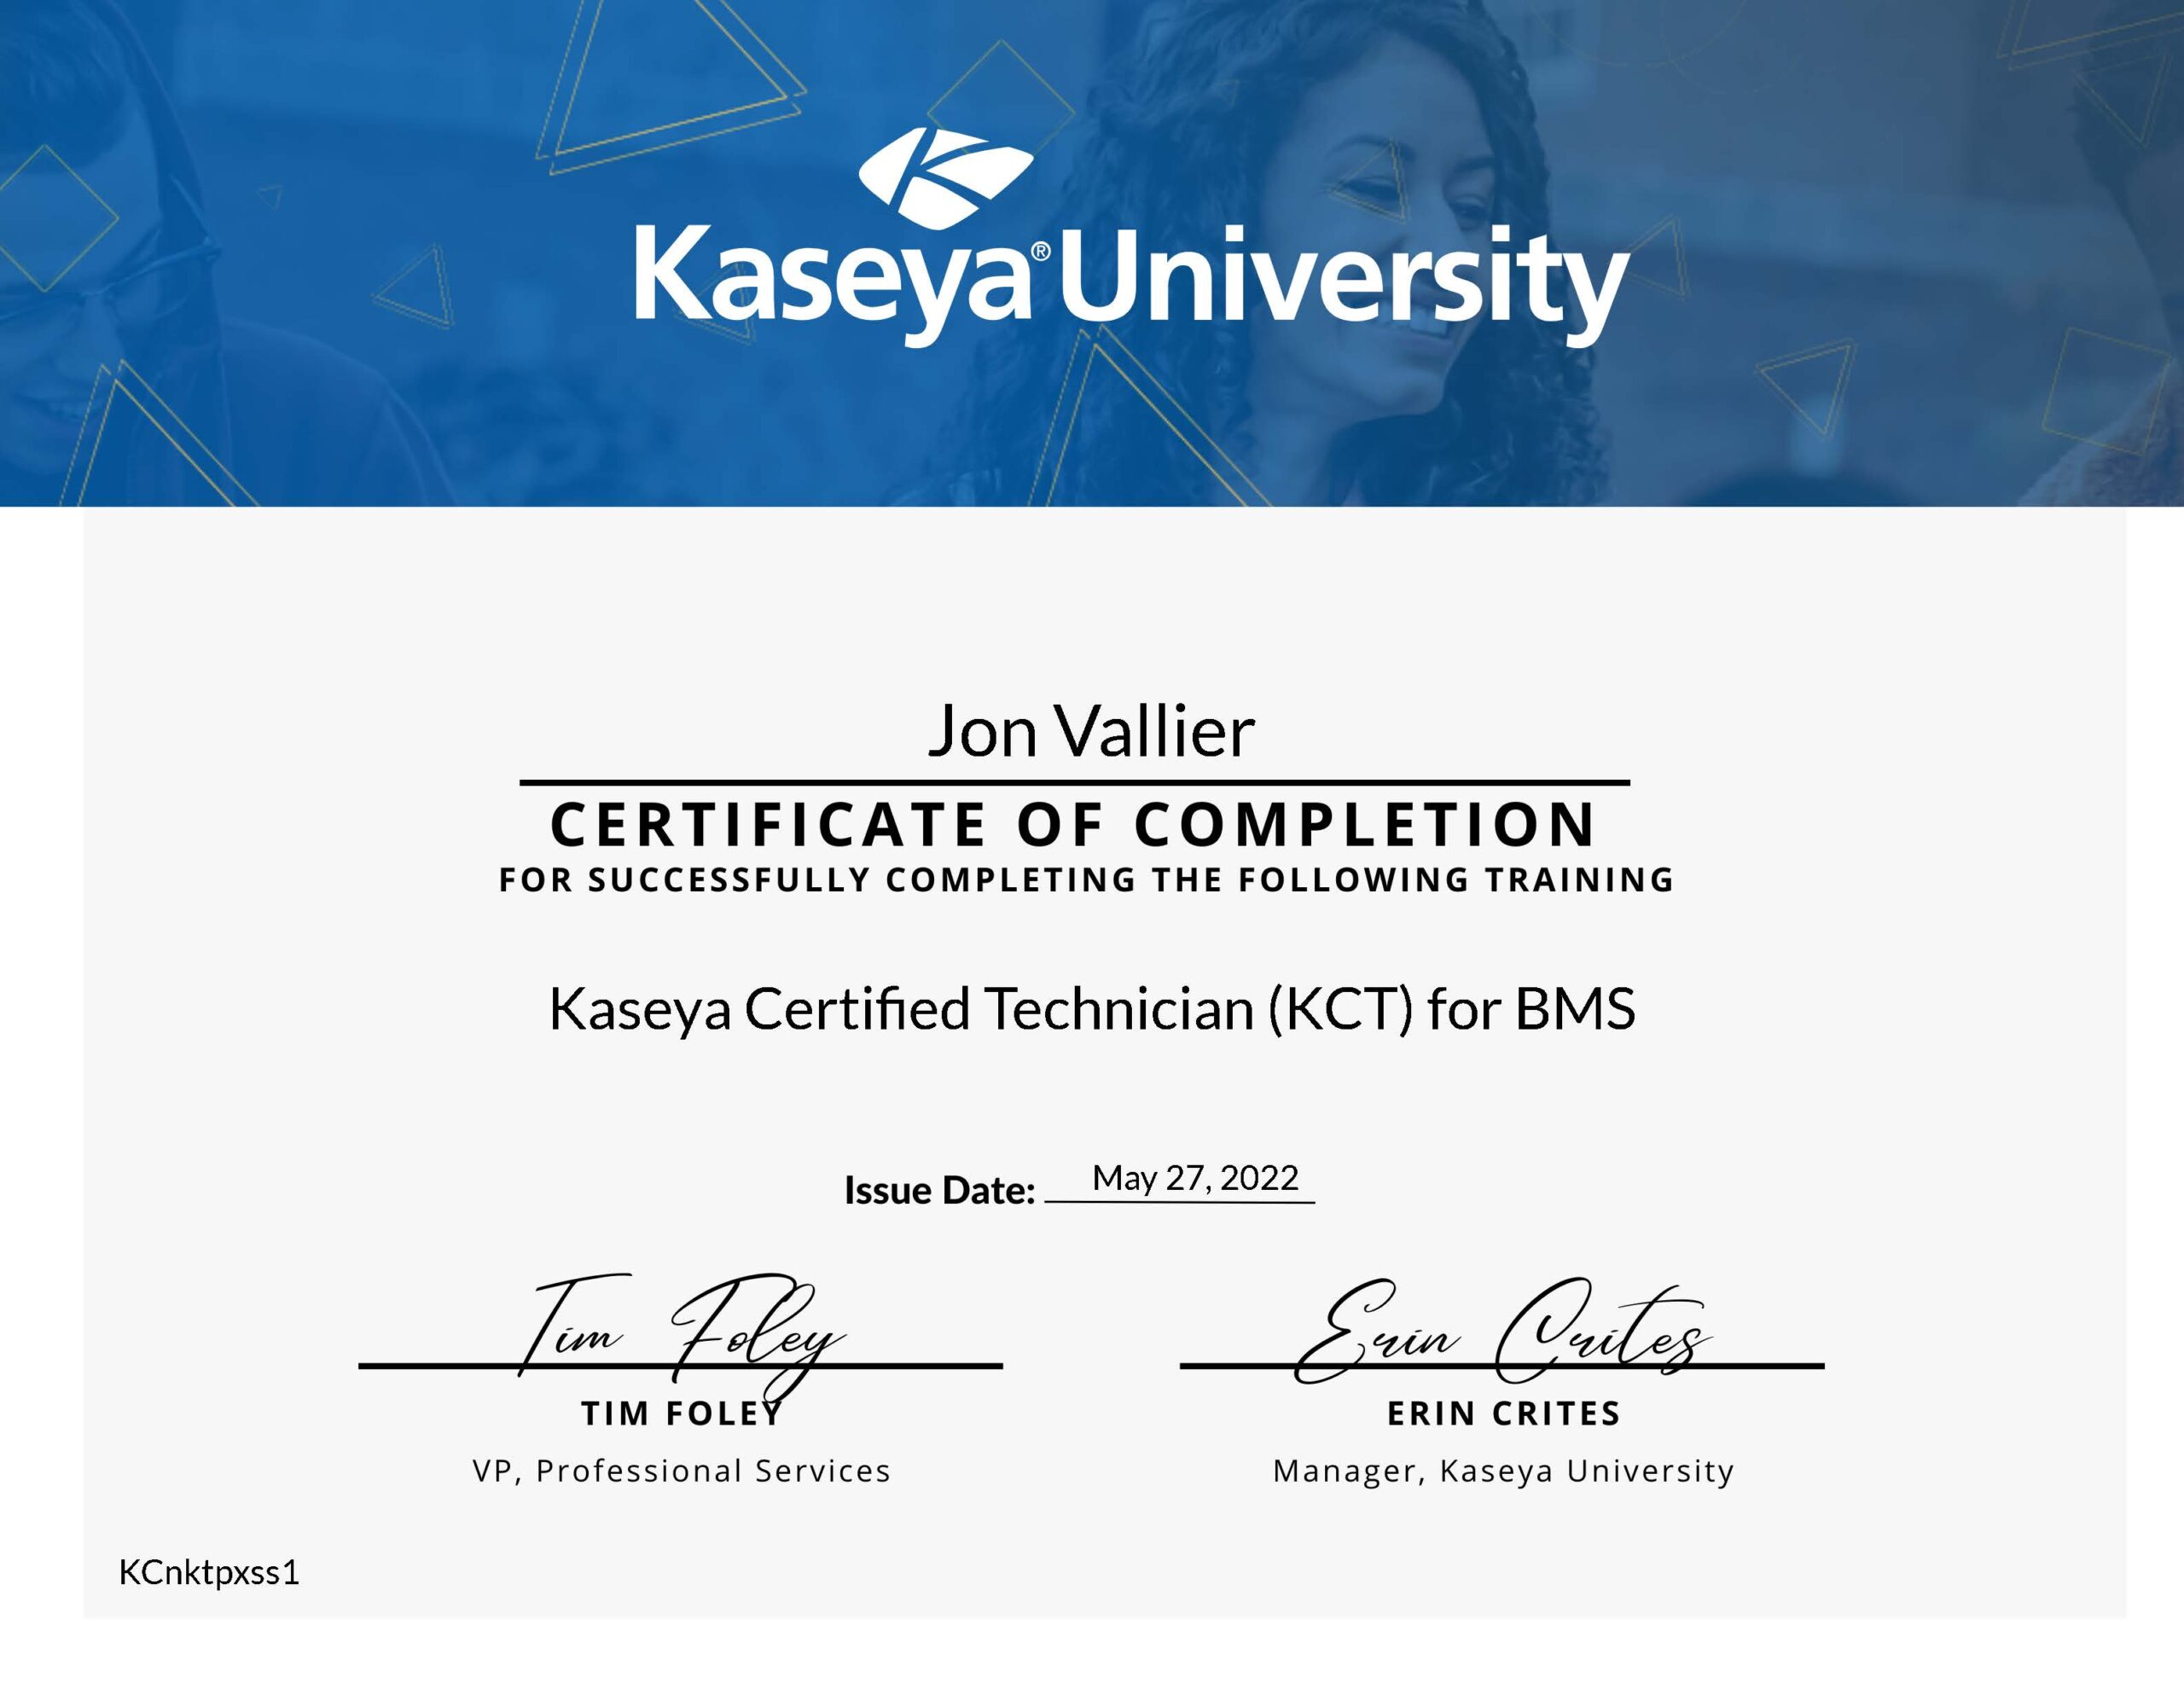 Completed “Kaseya Certified Technician for BMS” by Kaseya University